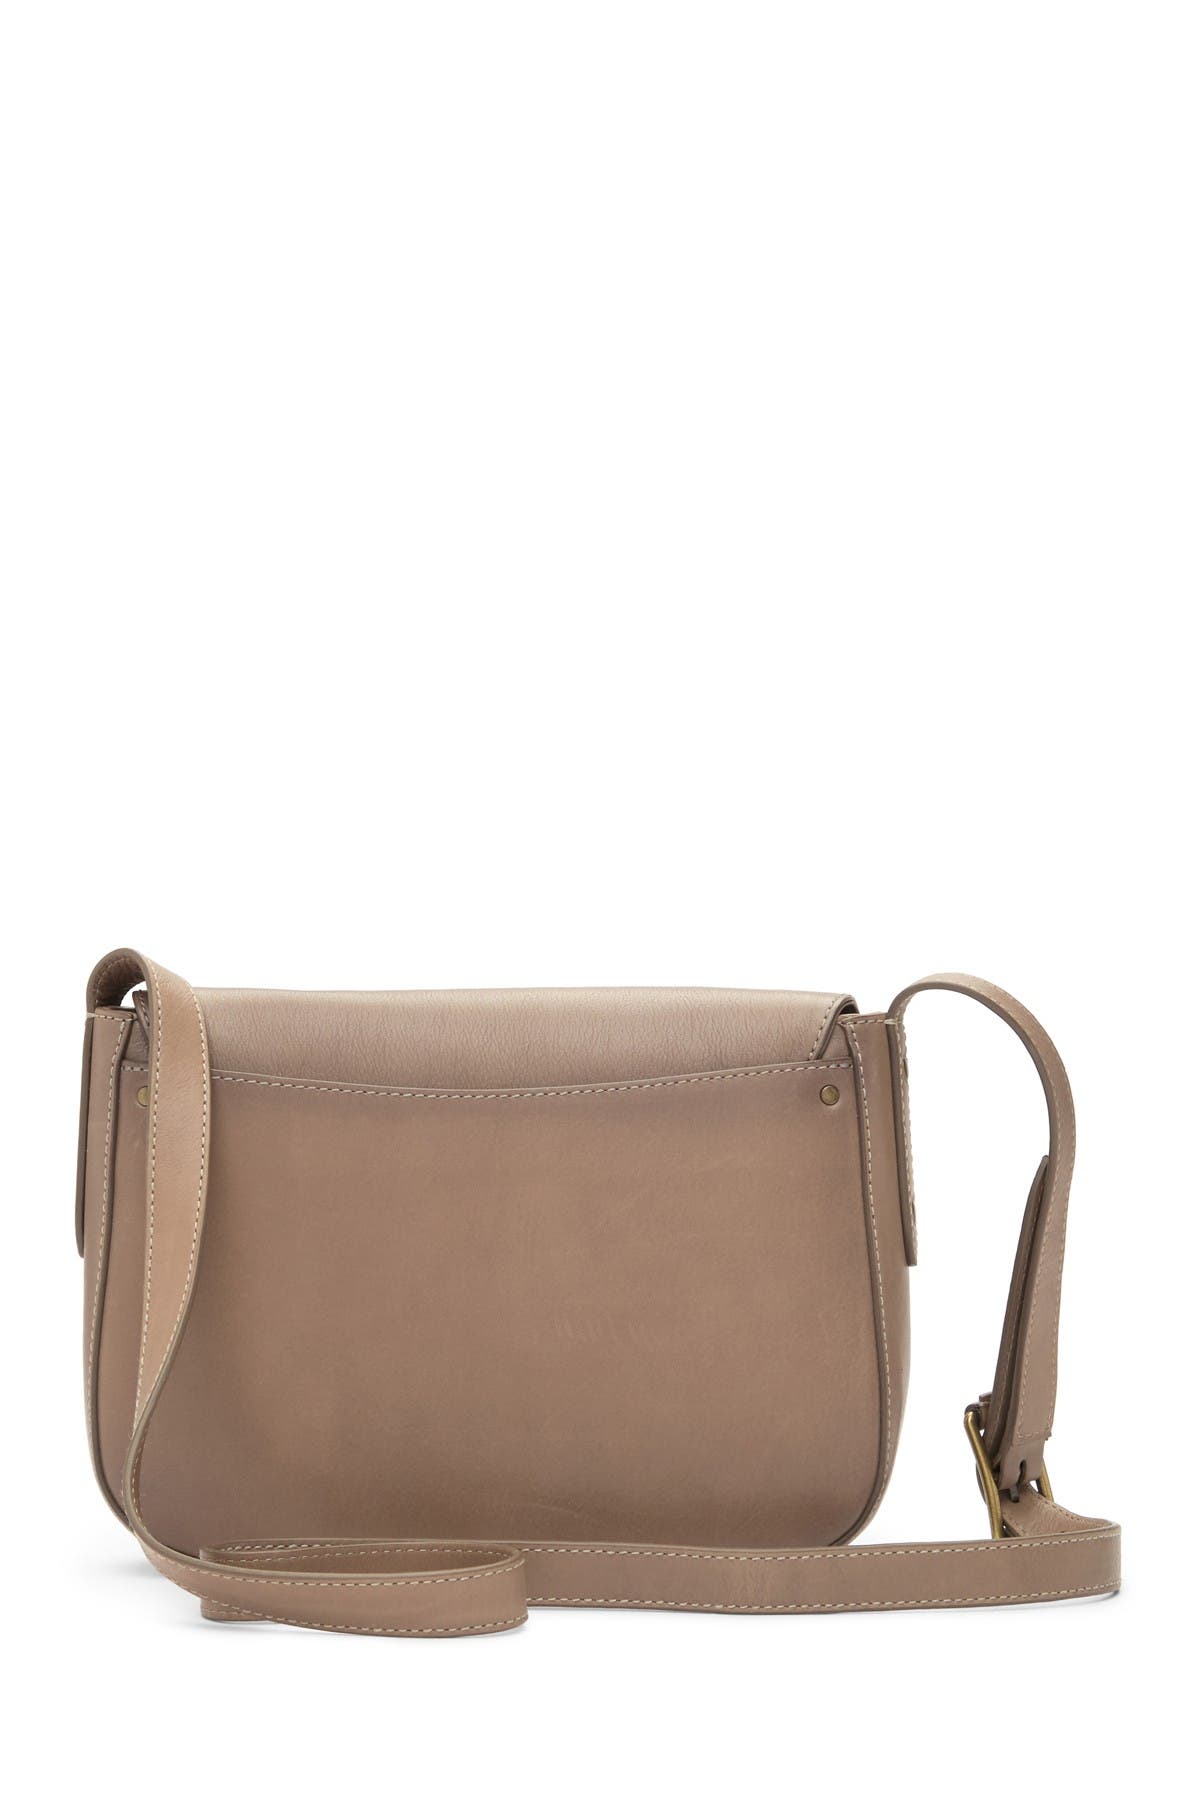 Frye | Olivia Leather Crossbody Bag | Nordstrom Rack